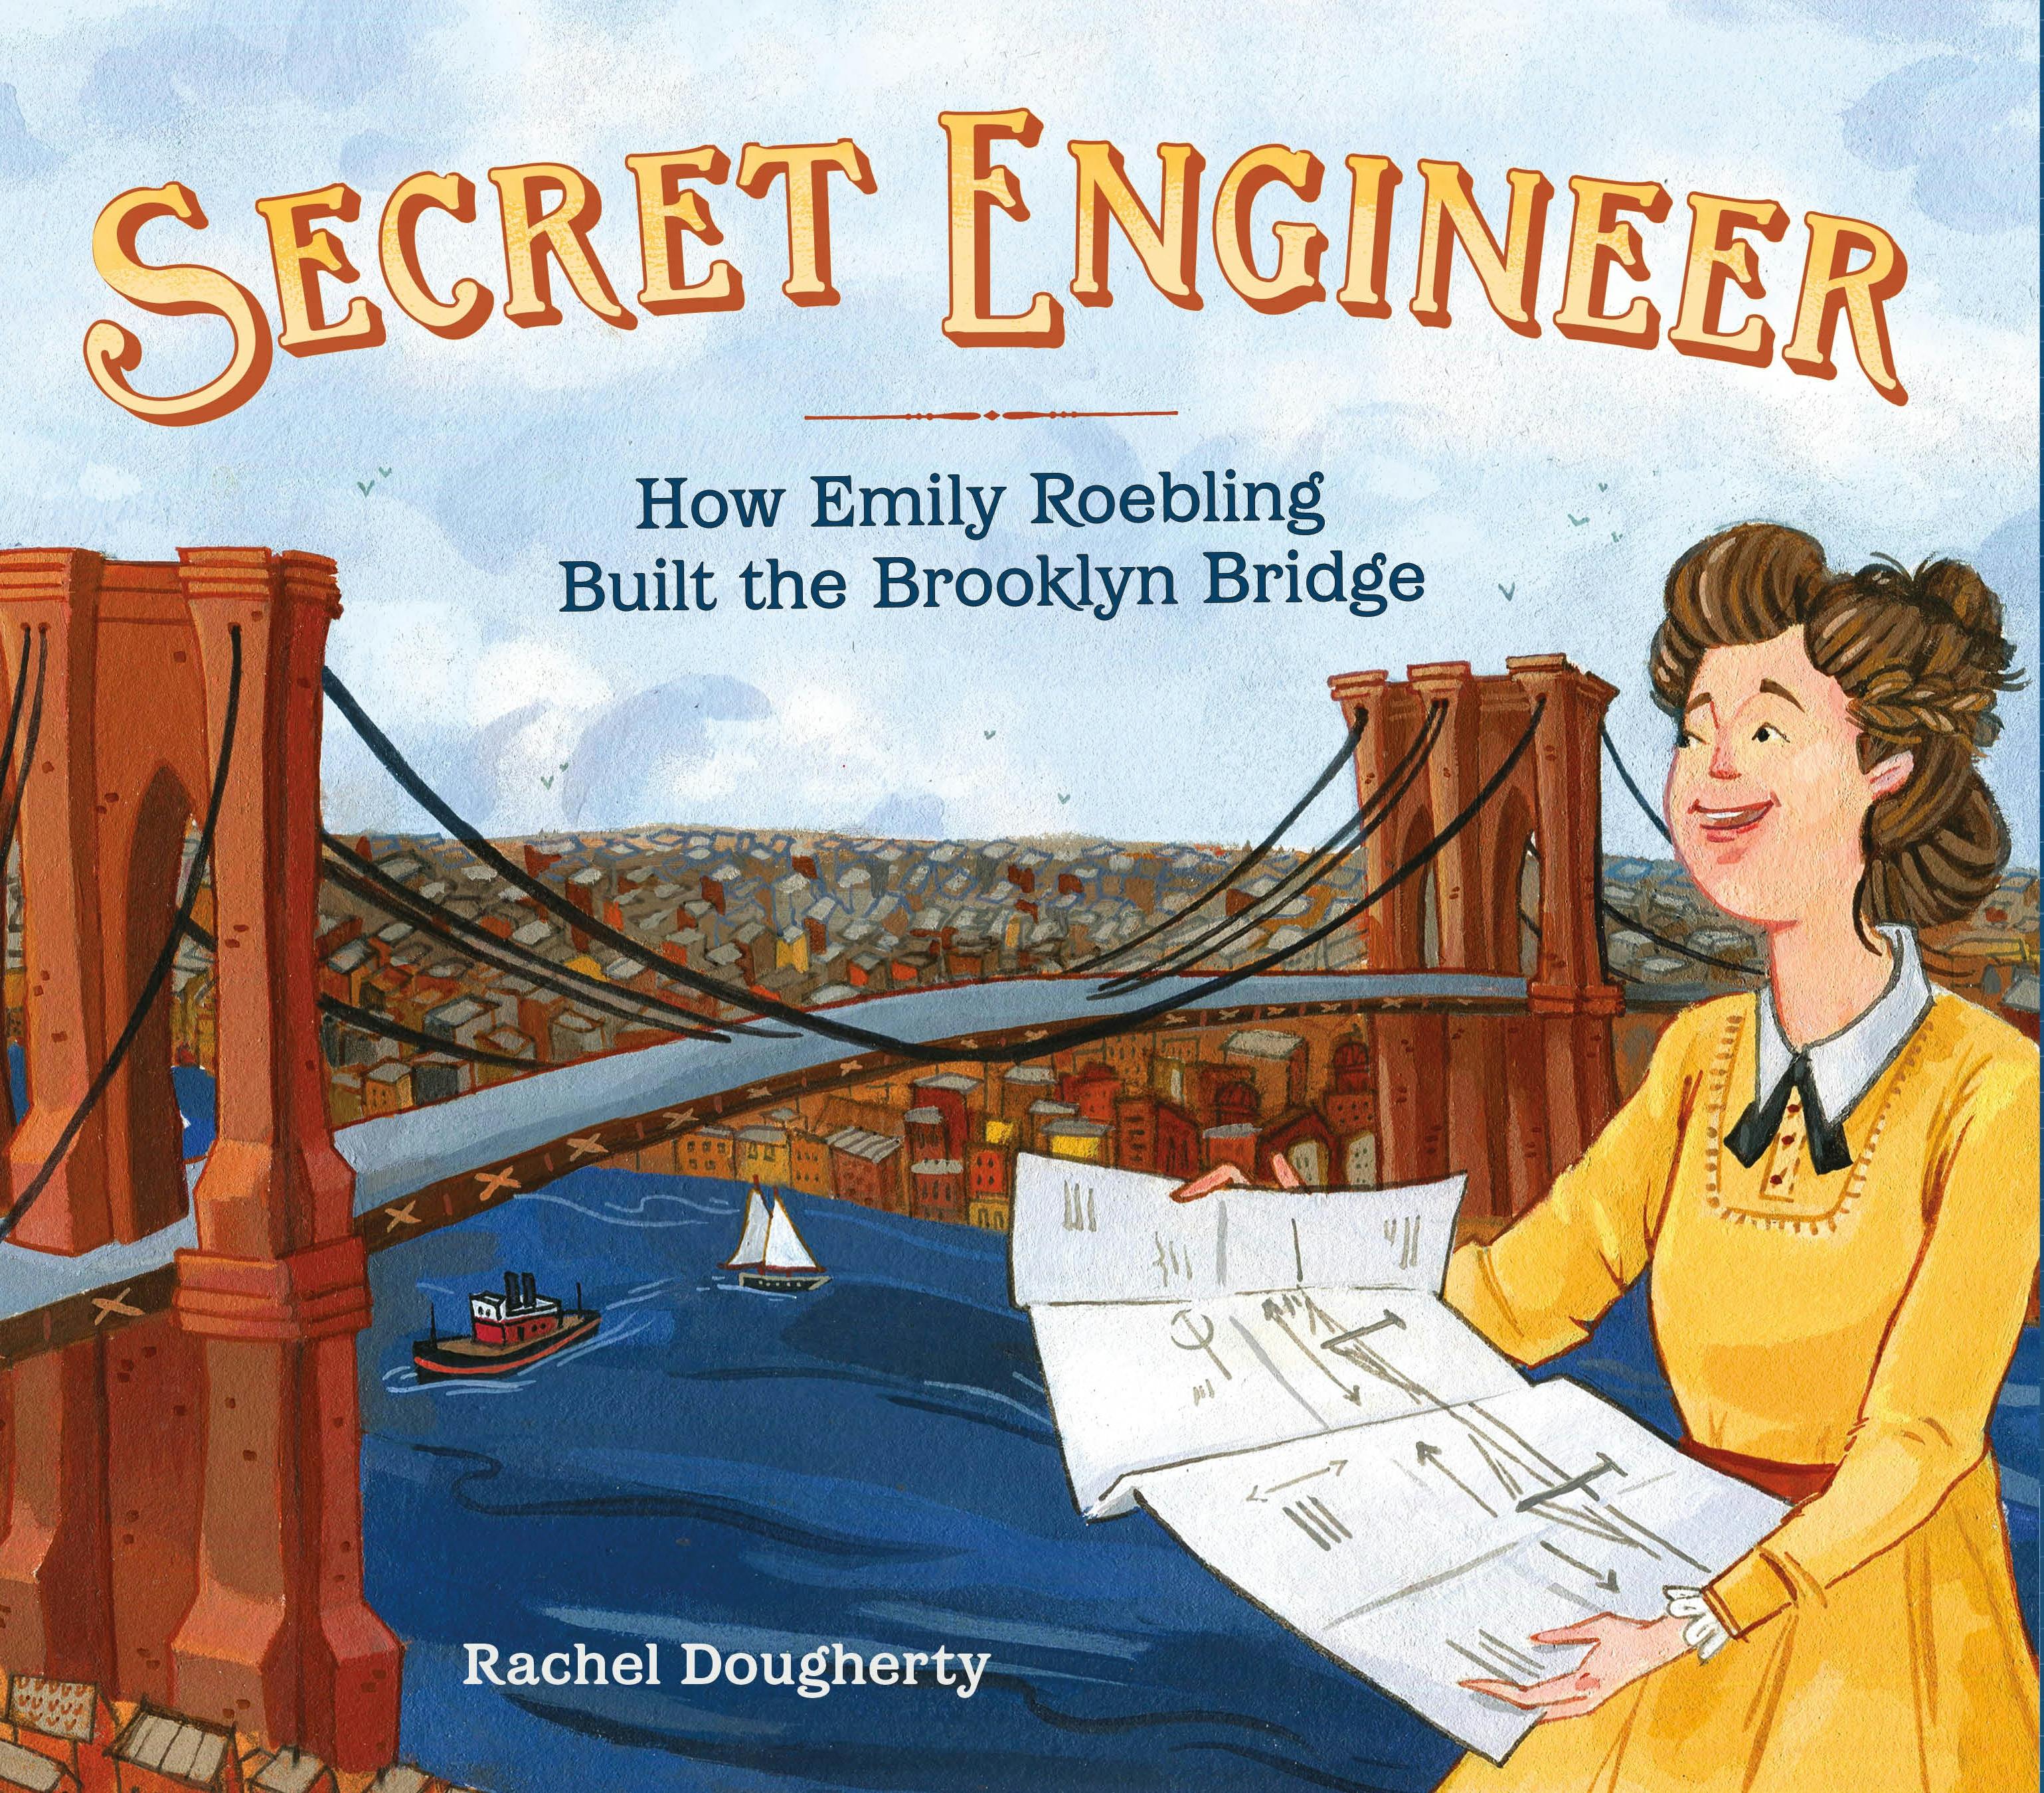 Emily How the Engineer: Secret Roebling Bridge Built Brooklyn